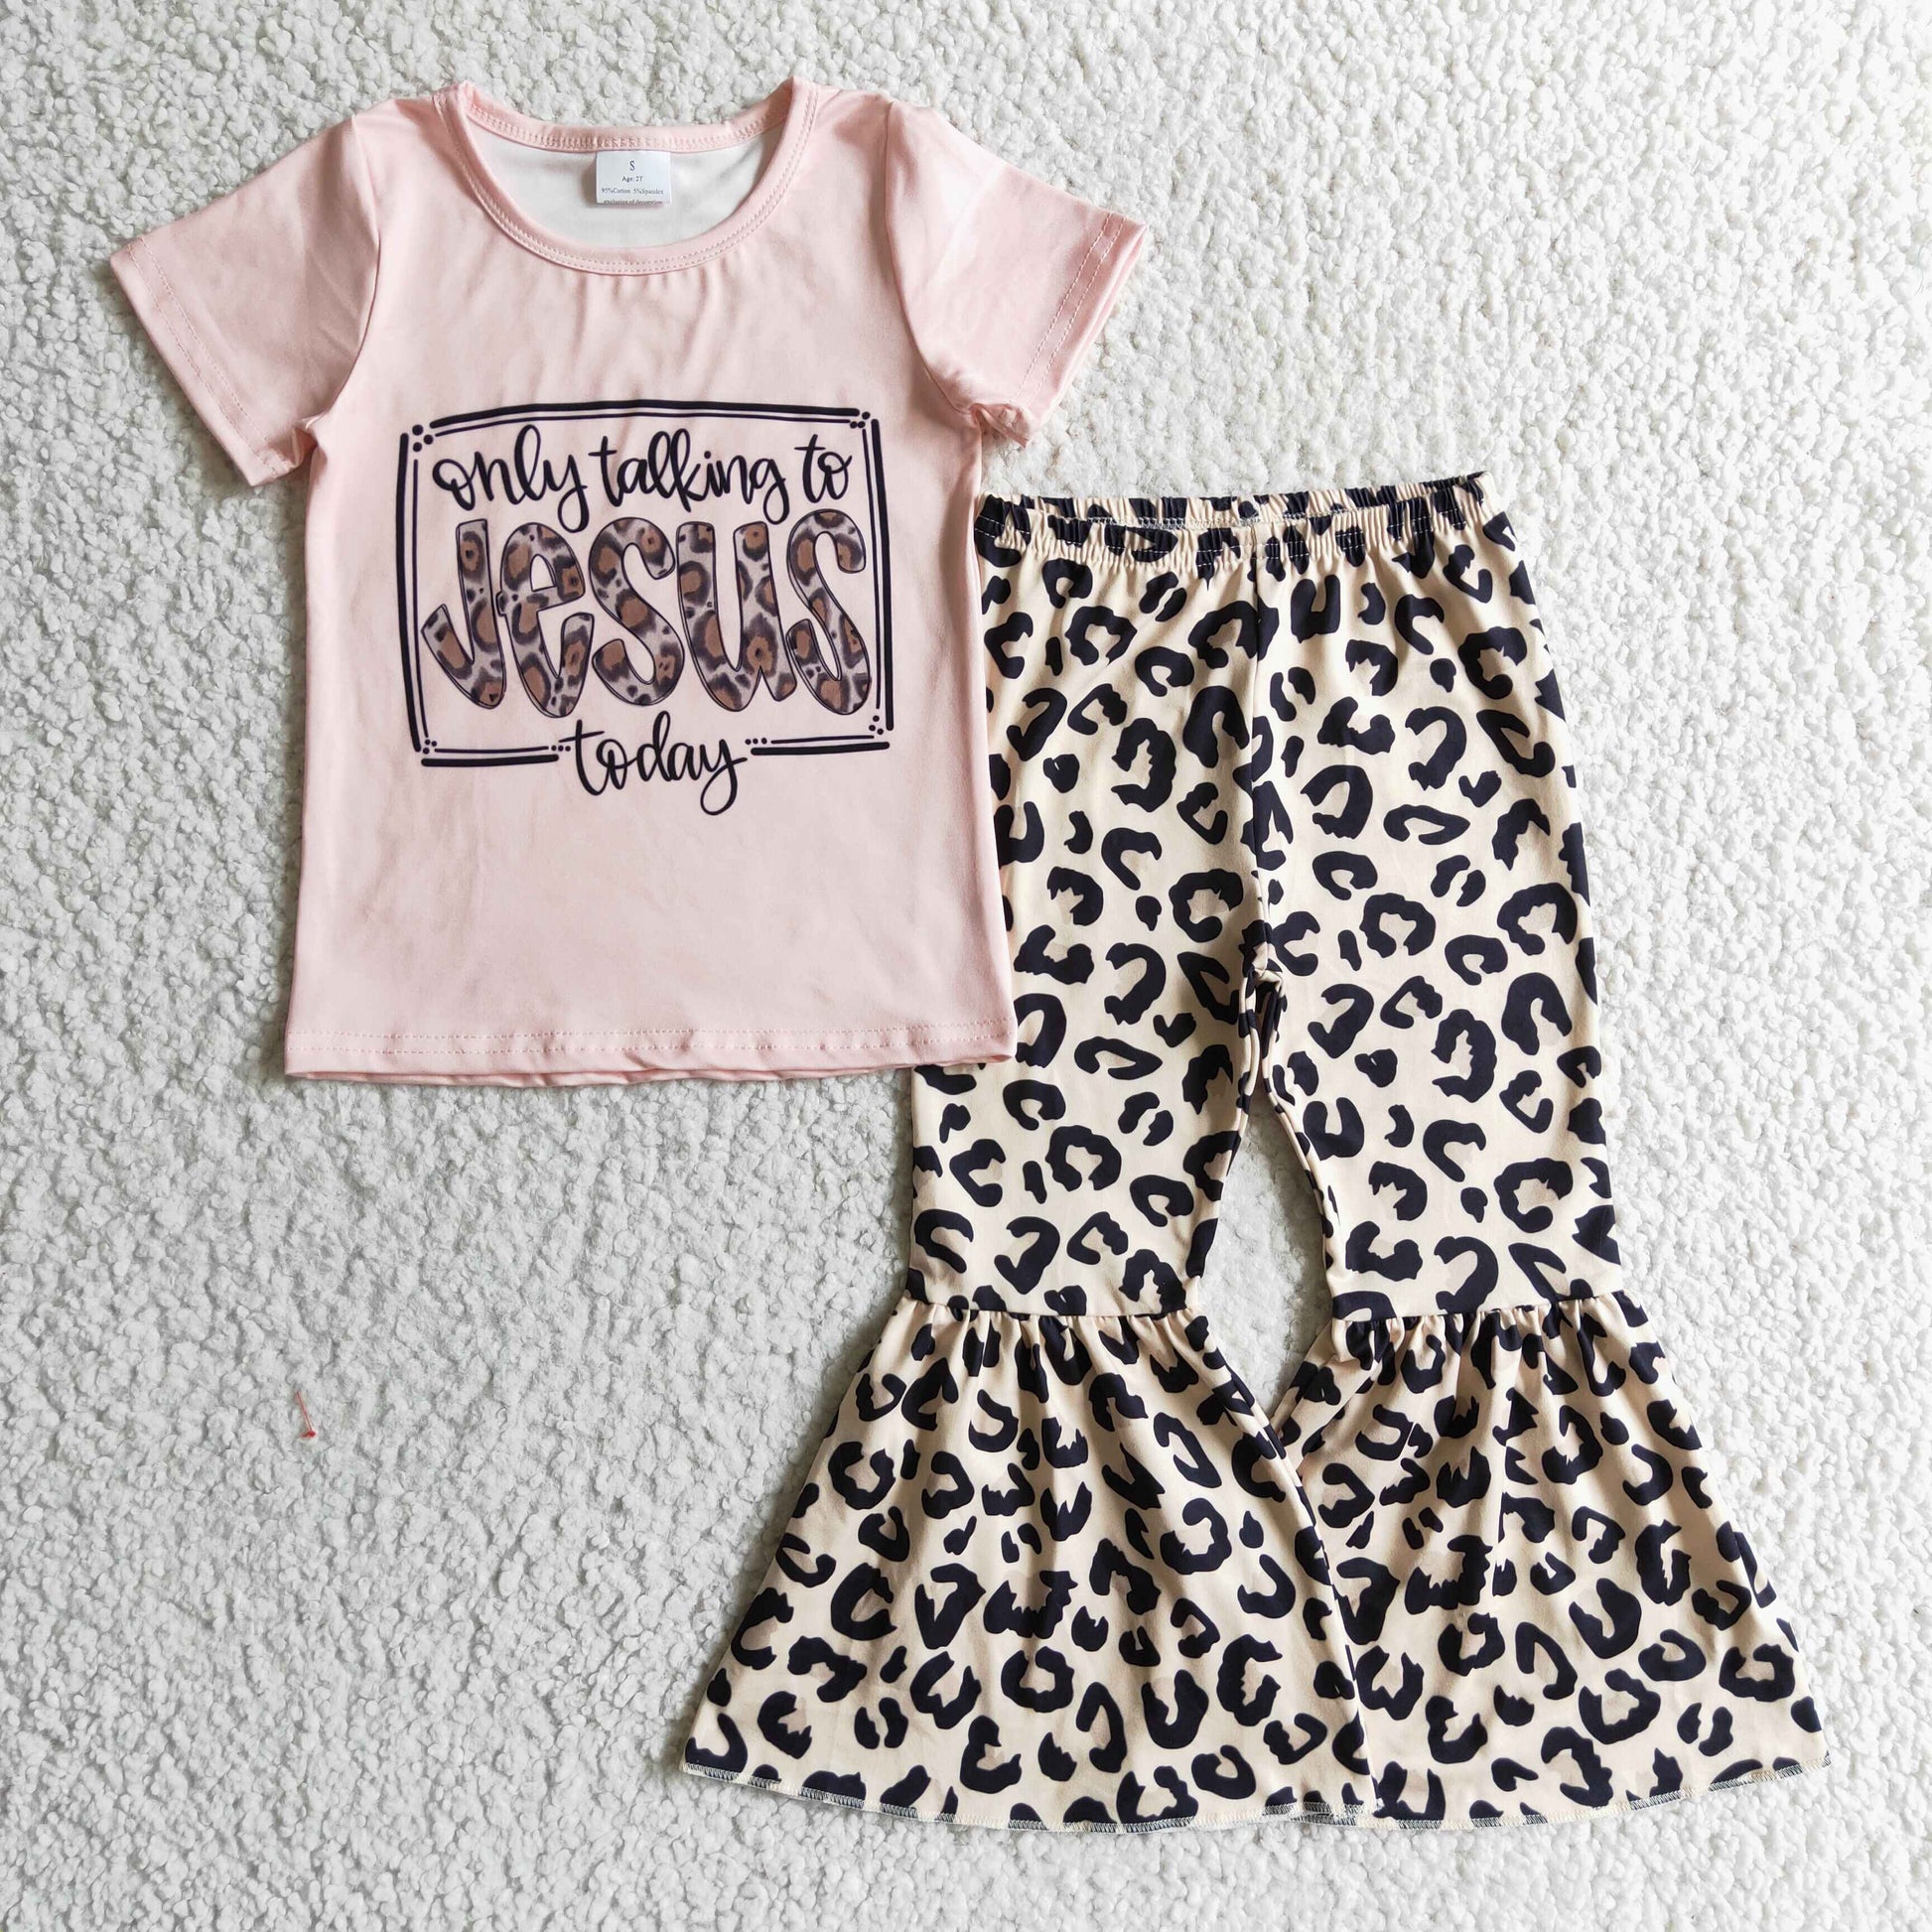 Girl's Pink Leopard Print Leggings, Leopard Print Leggings for Girls, Animal  Print Leggings for Girls, Fashion Leggings for Girls 